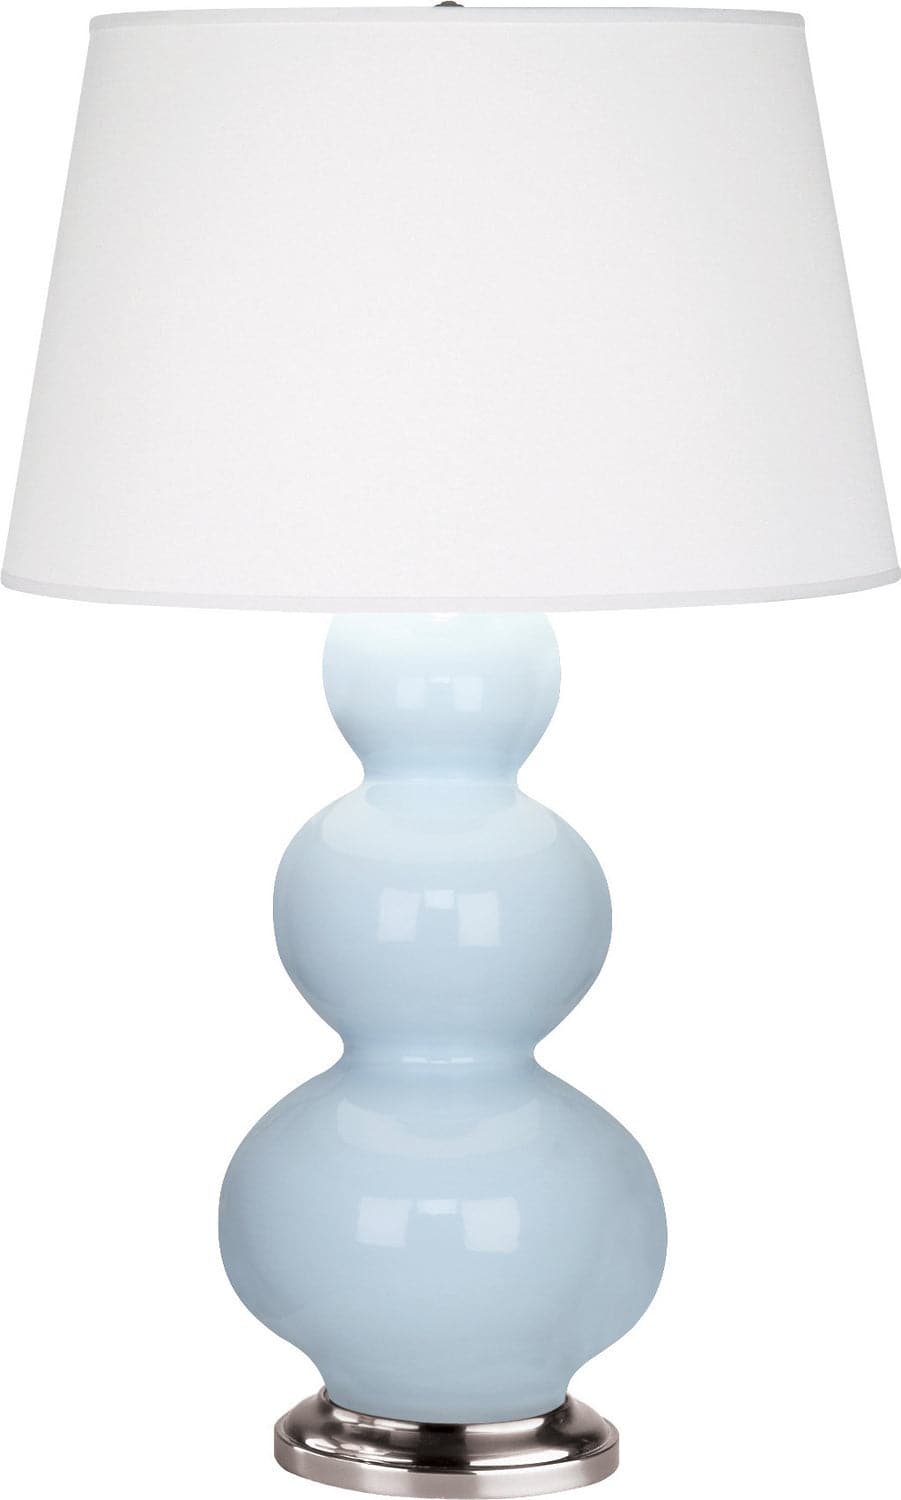 Robert Abbey - 361X - One Light Table Lamp - Triple Gourd - Baby Blue Glazed w/Antique Silver